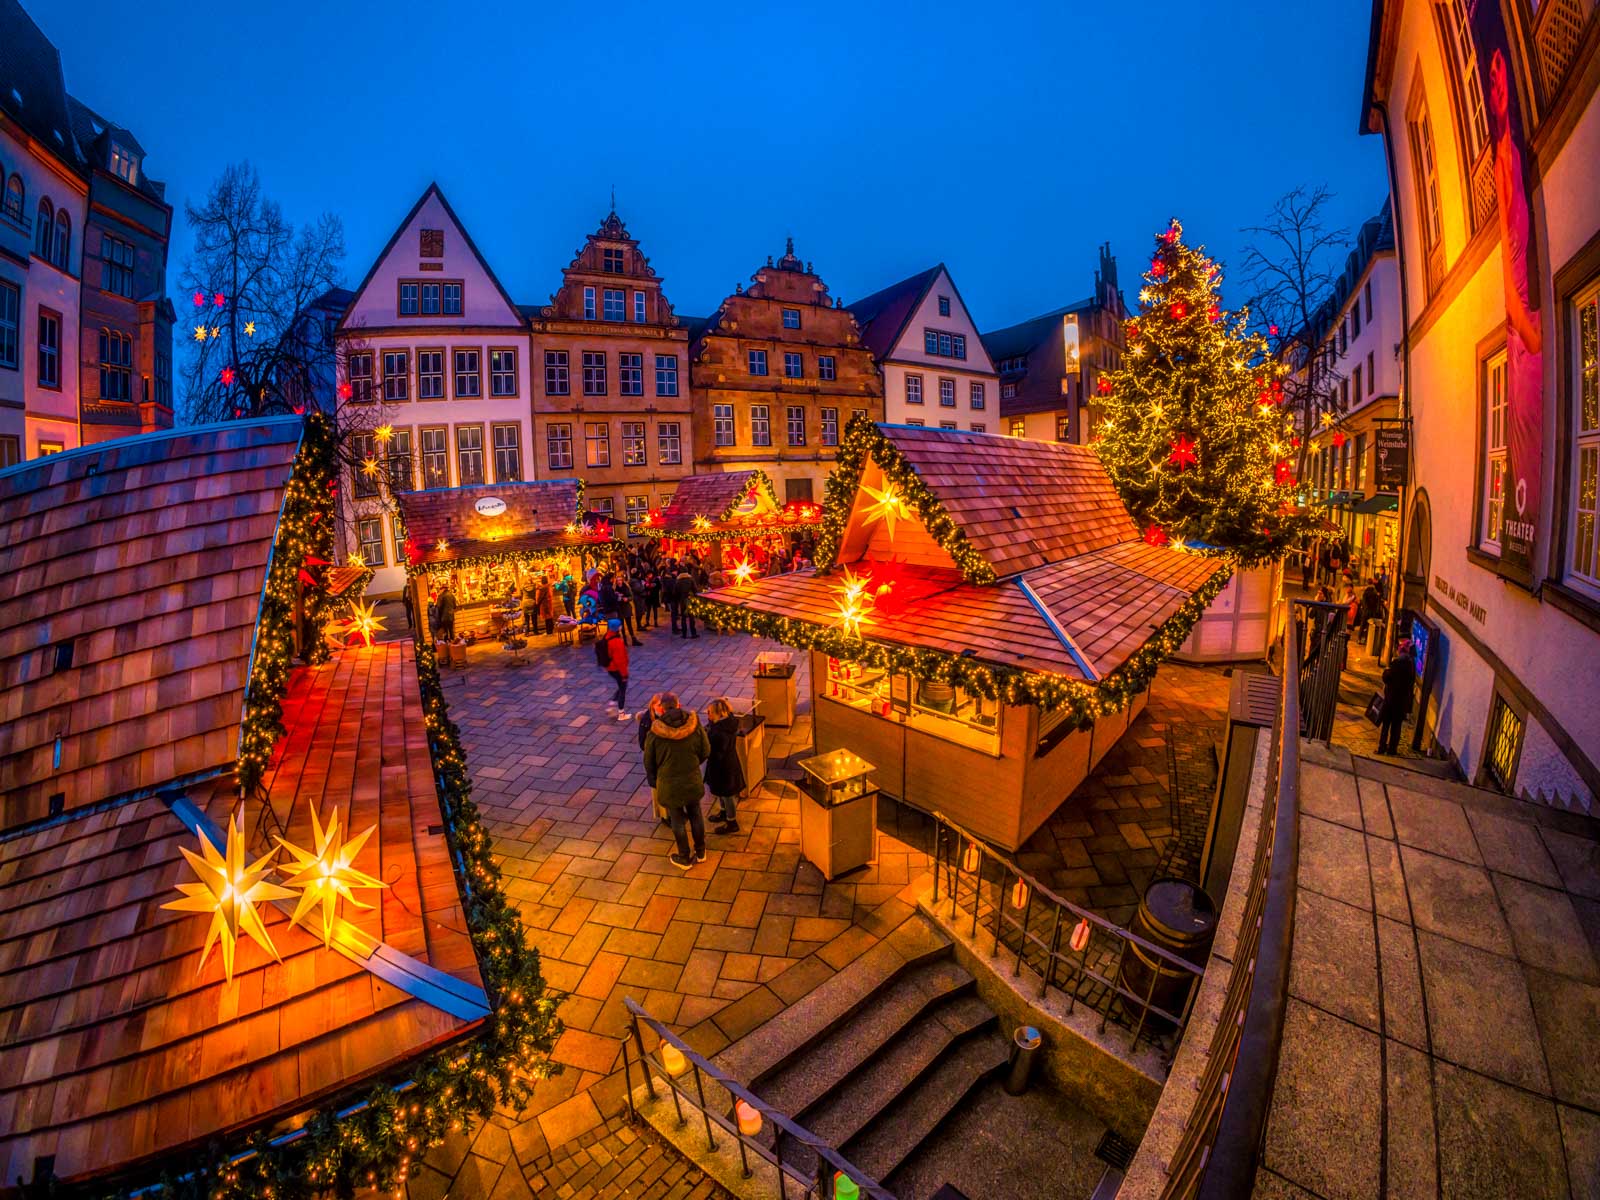 Christmas market at the 'Alter Markt' in December 2021 (Bielefeld, Germany).